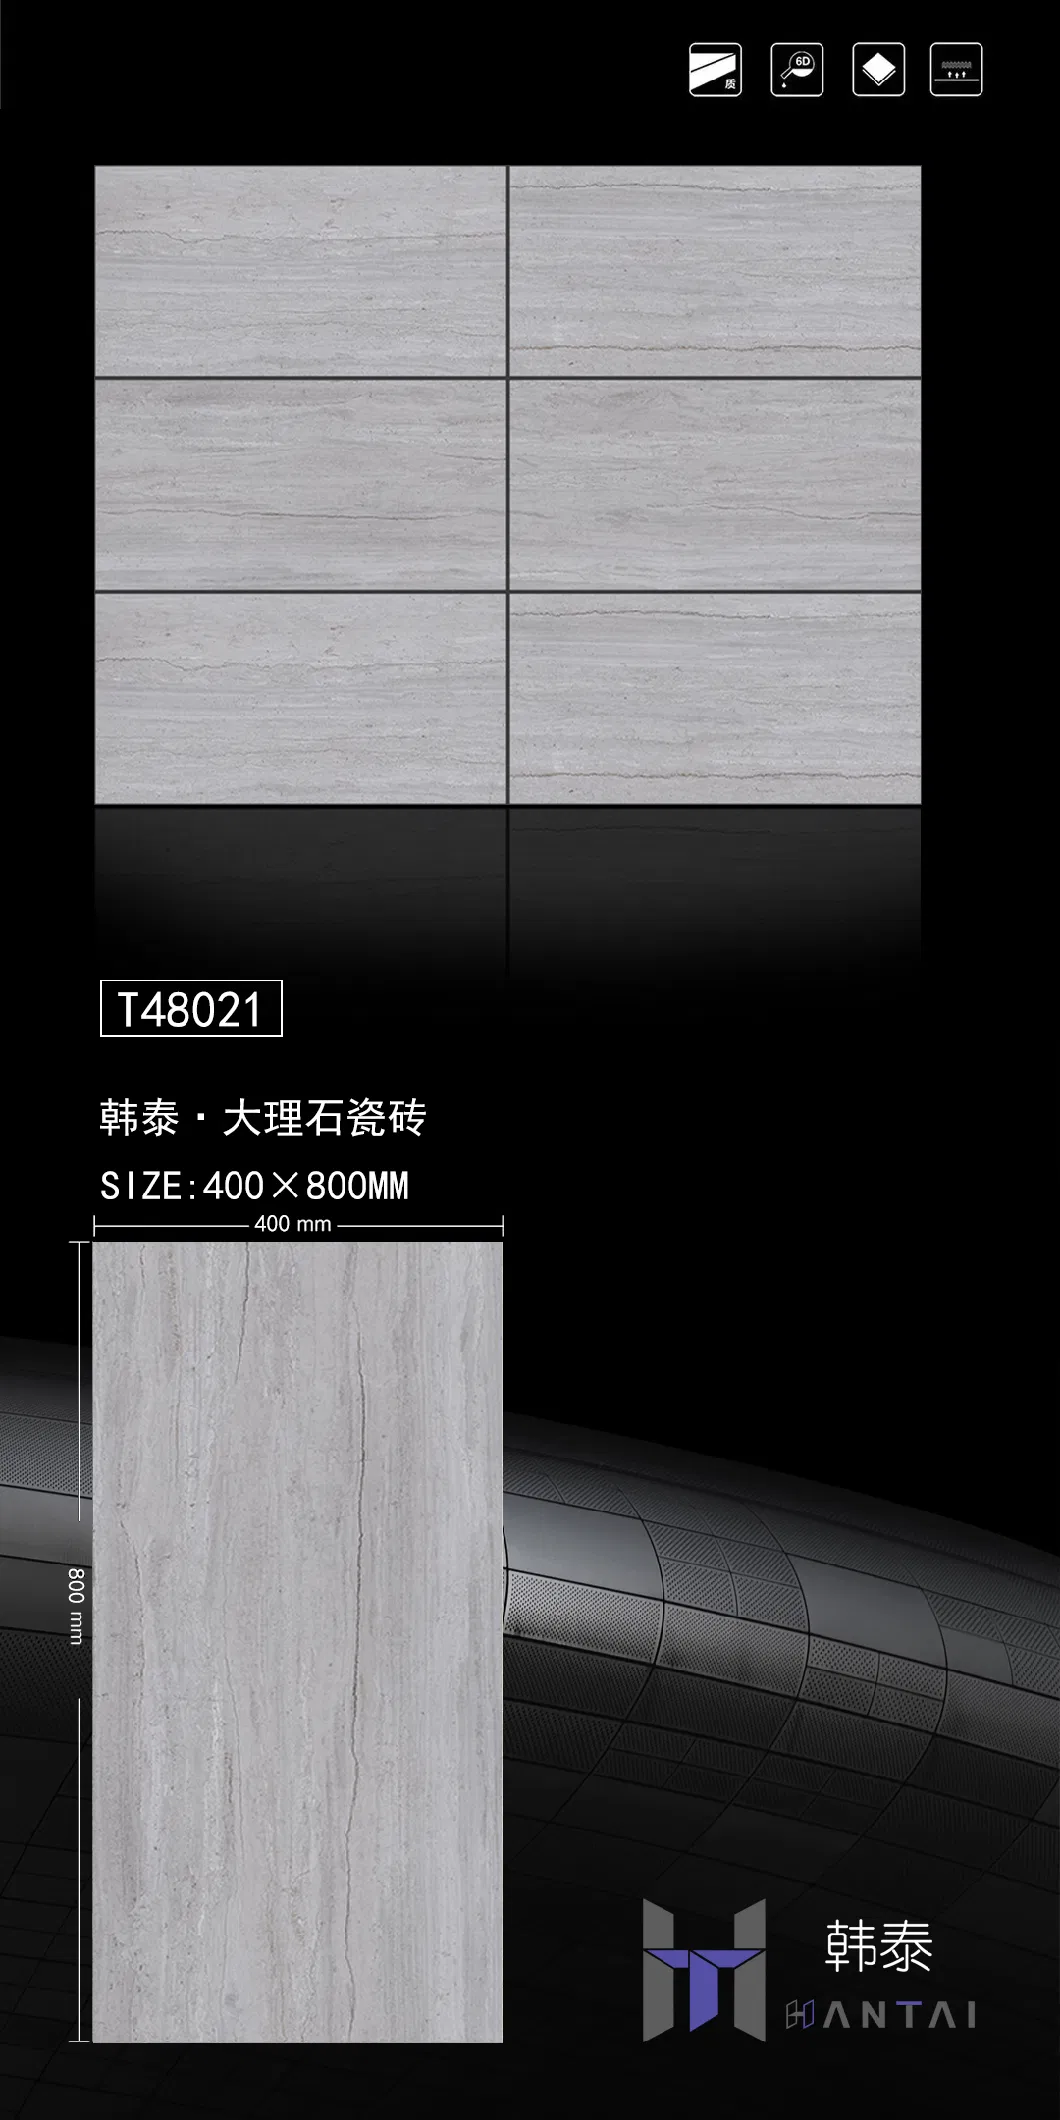 400*800 Ceramic Wood Flooring Bathroom Tile for Home Decoration